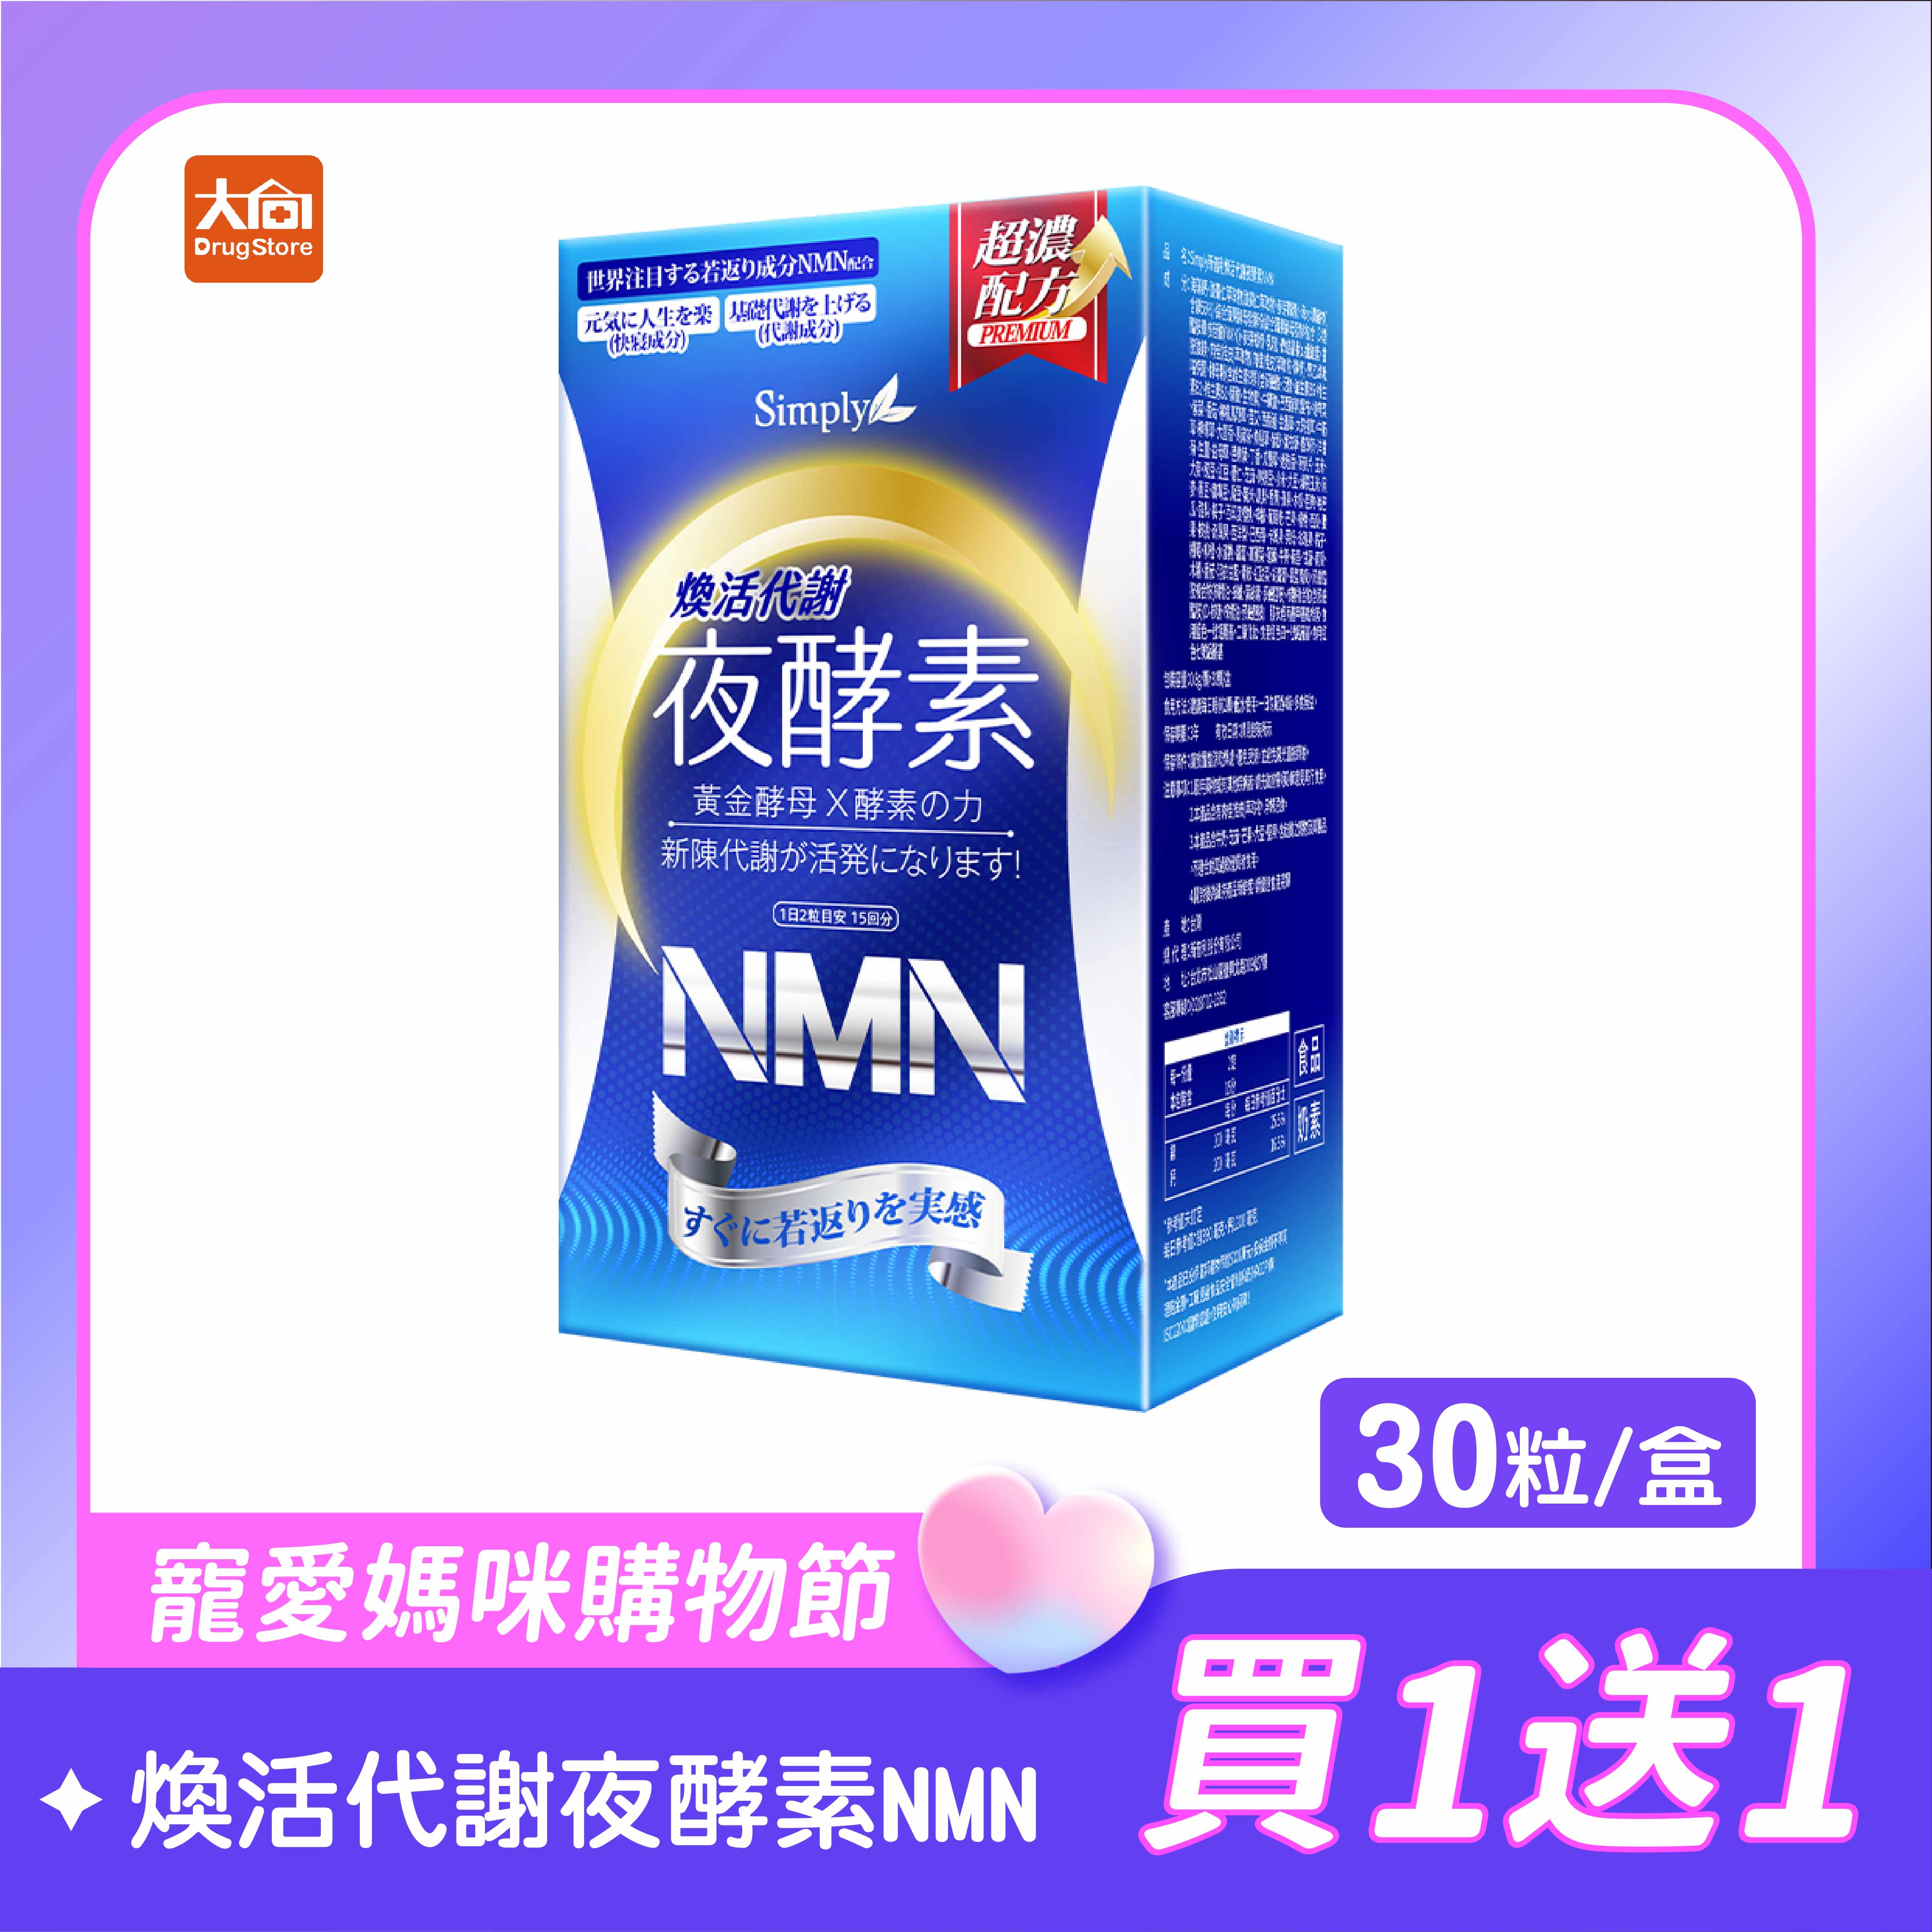 Simply新普利 煥活代謝夜酵素NMN 30錠/盒 (2件組) #限時優惠